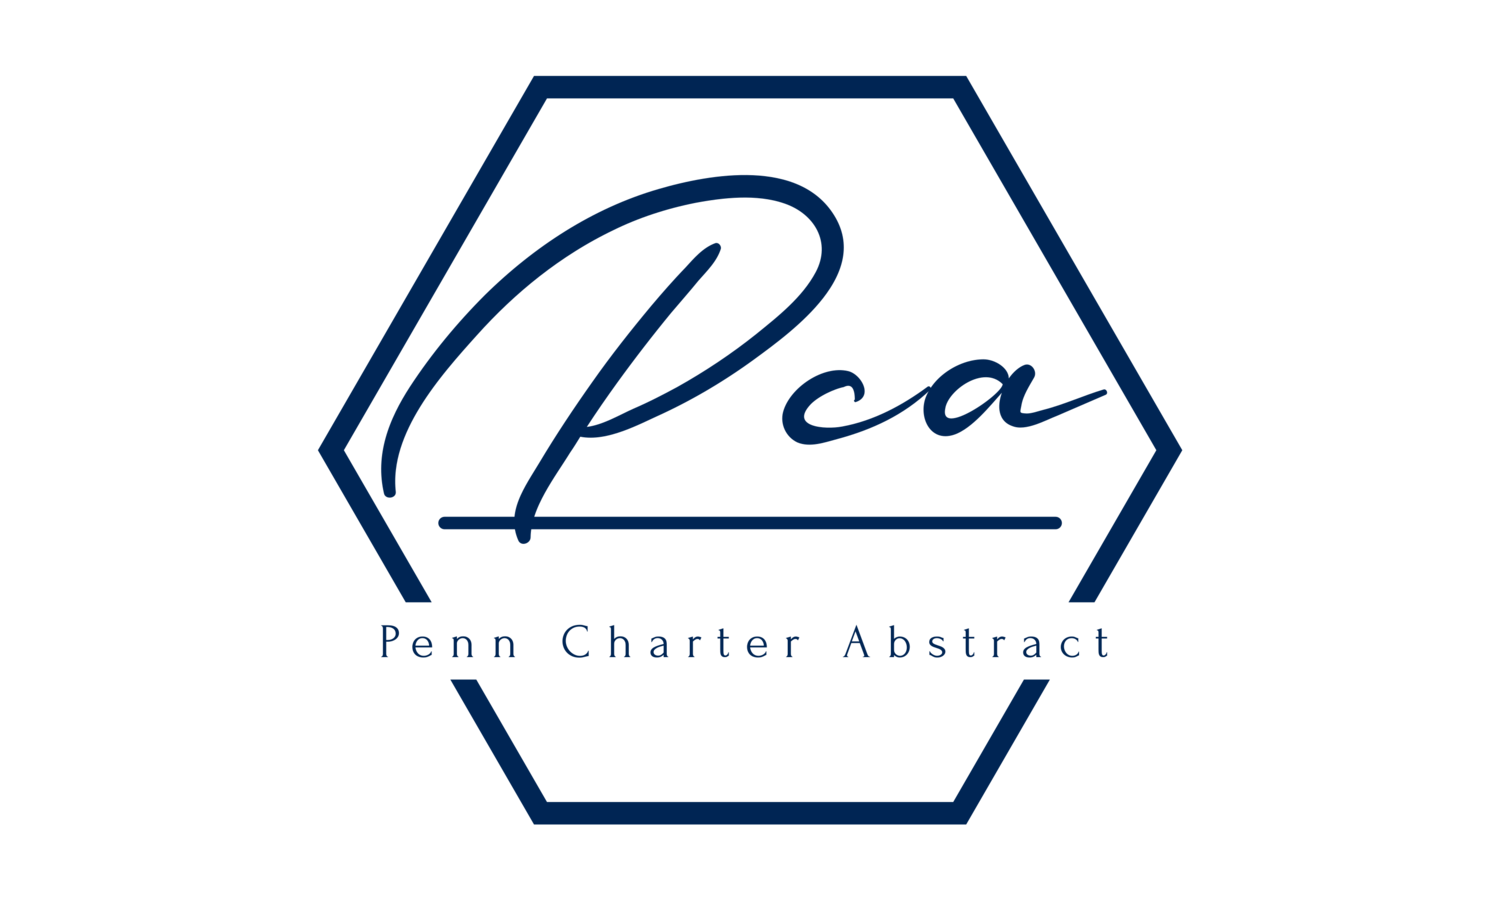 Penn Charter Abstract